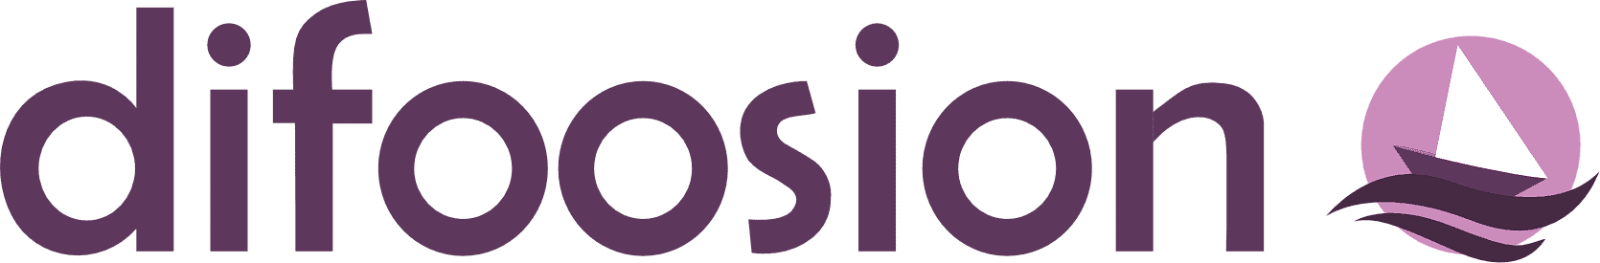 Logo de Difoosion